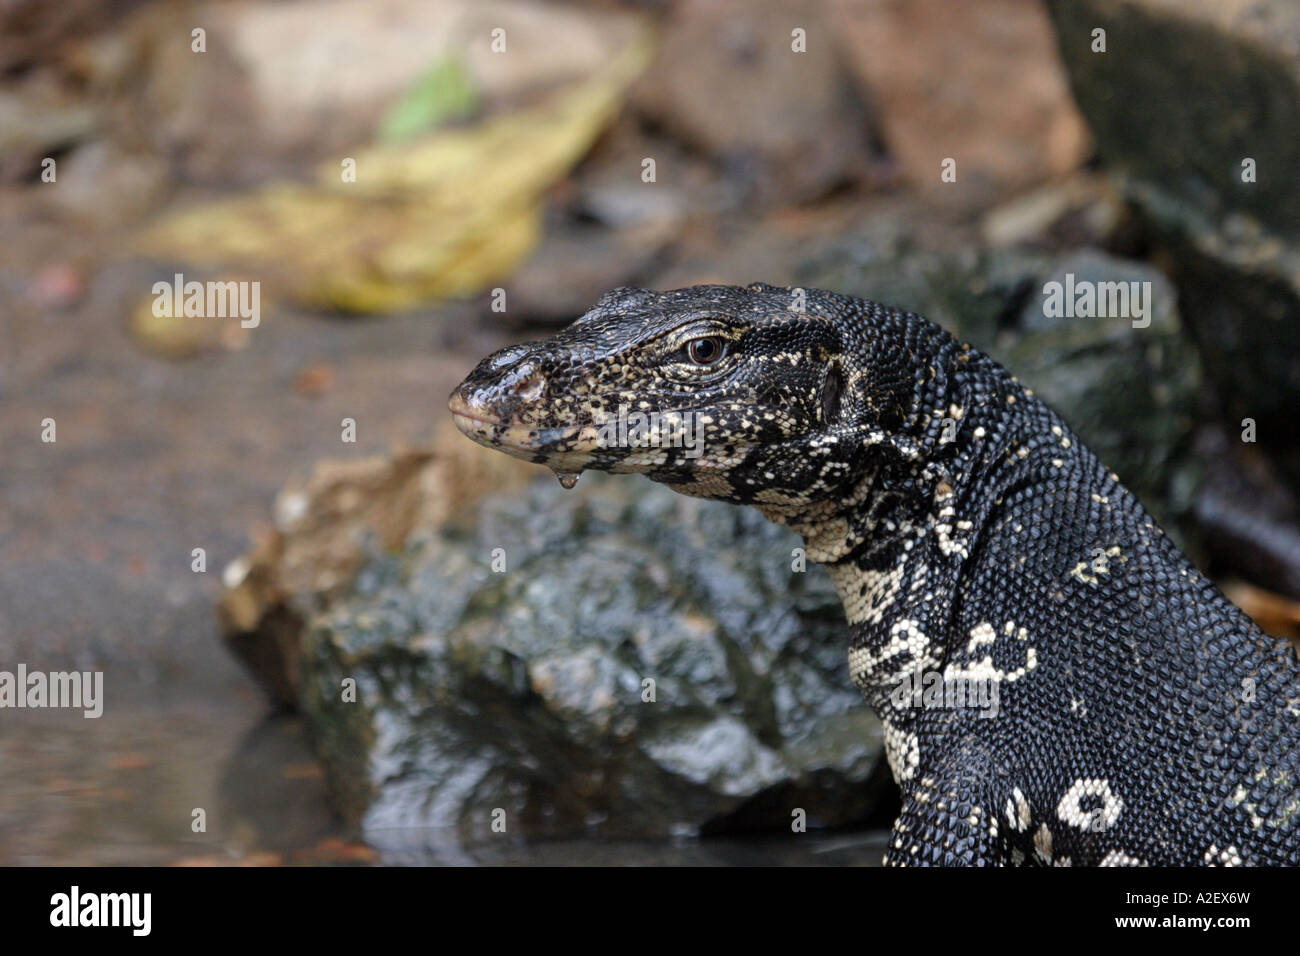 Close up of the head of a Water Monitor lizard, Varanus salvator, Sri Lanka Asia Stock Photo